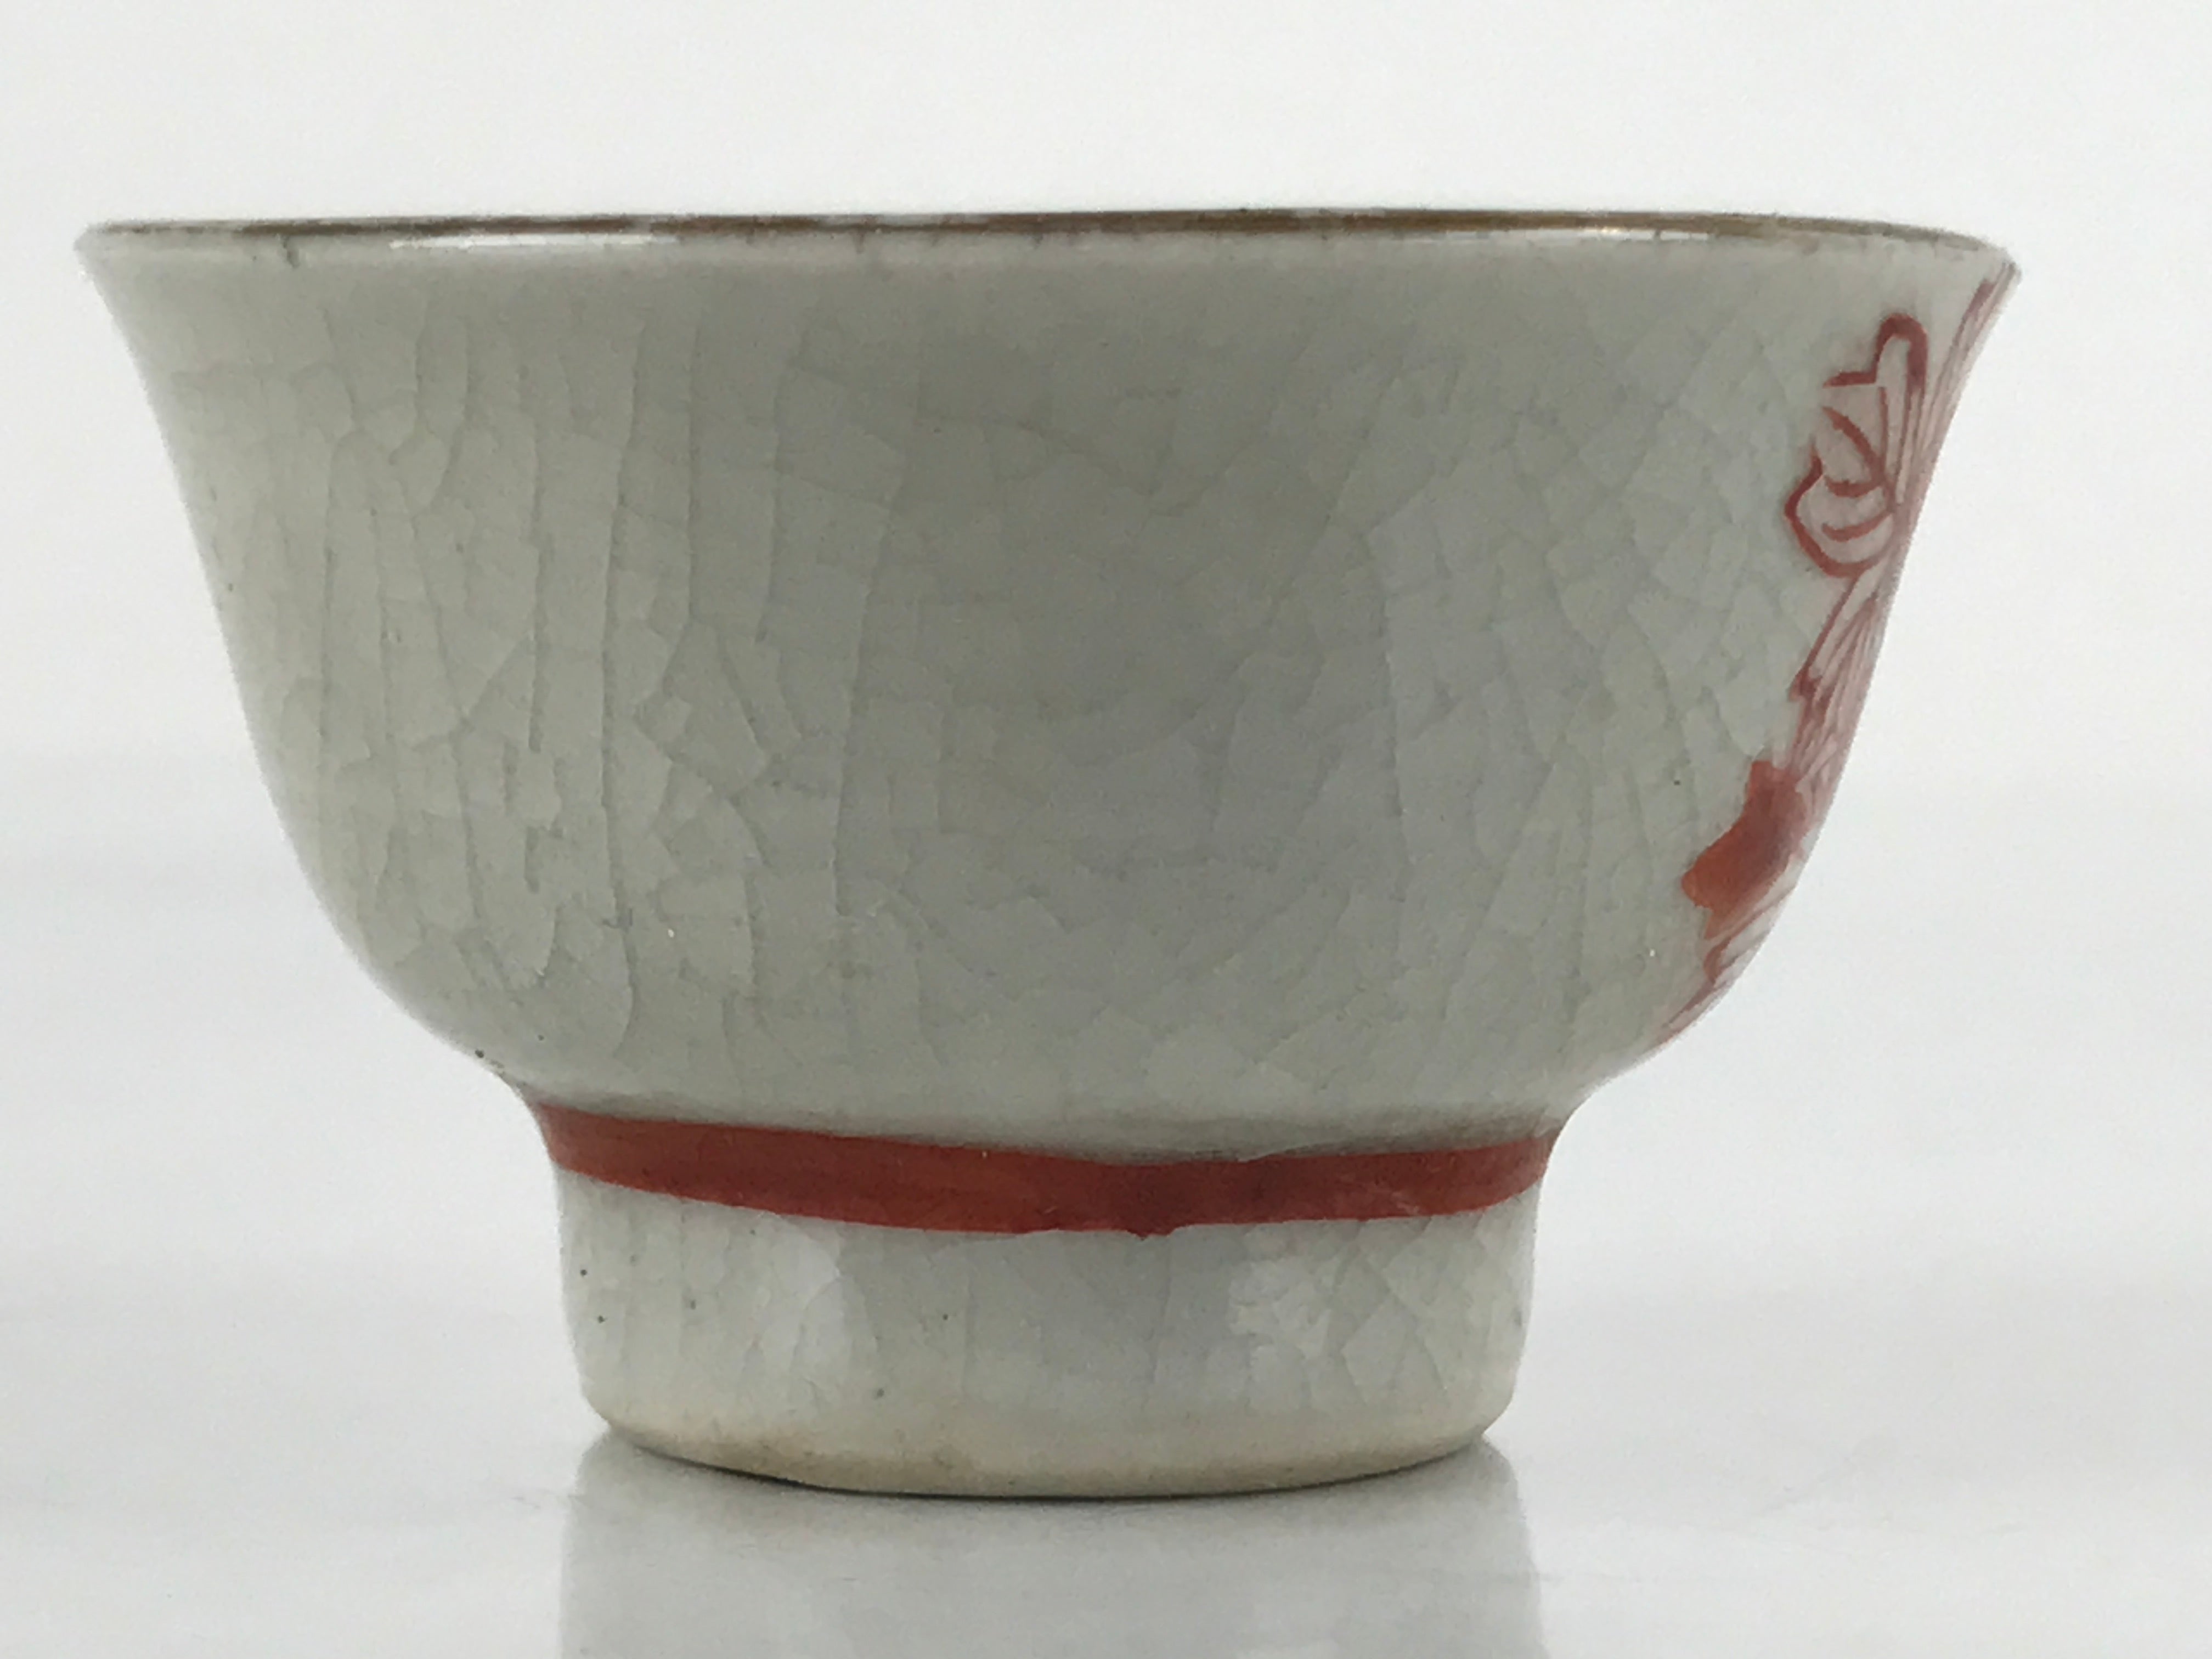 Japanese Porcelain Sake Cup Vtg Wan Ochoko Guinomi Peony Botan Red Gray G182